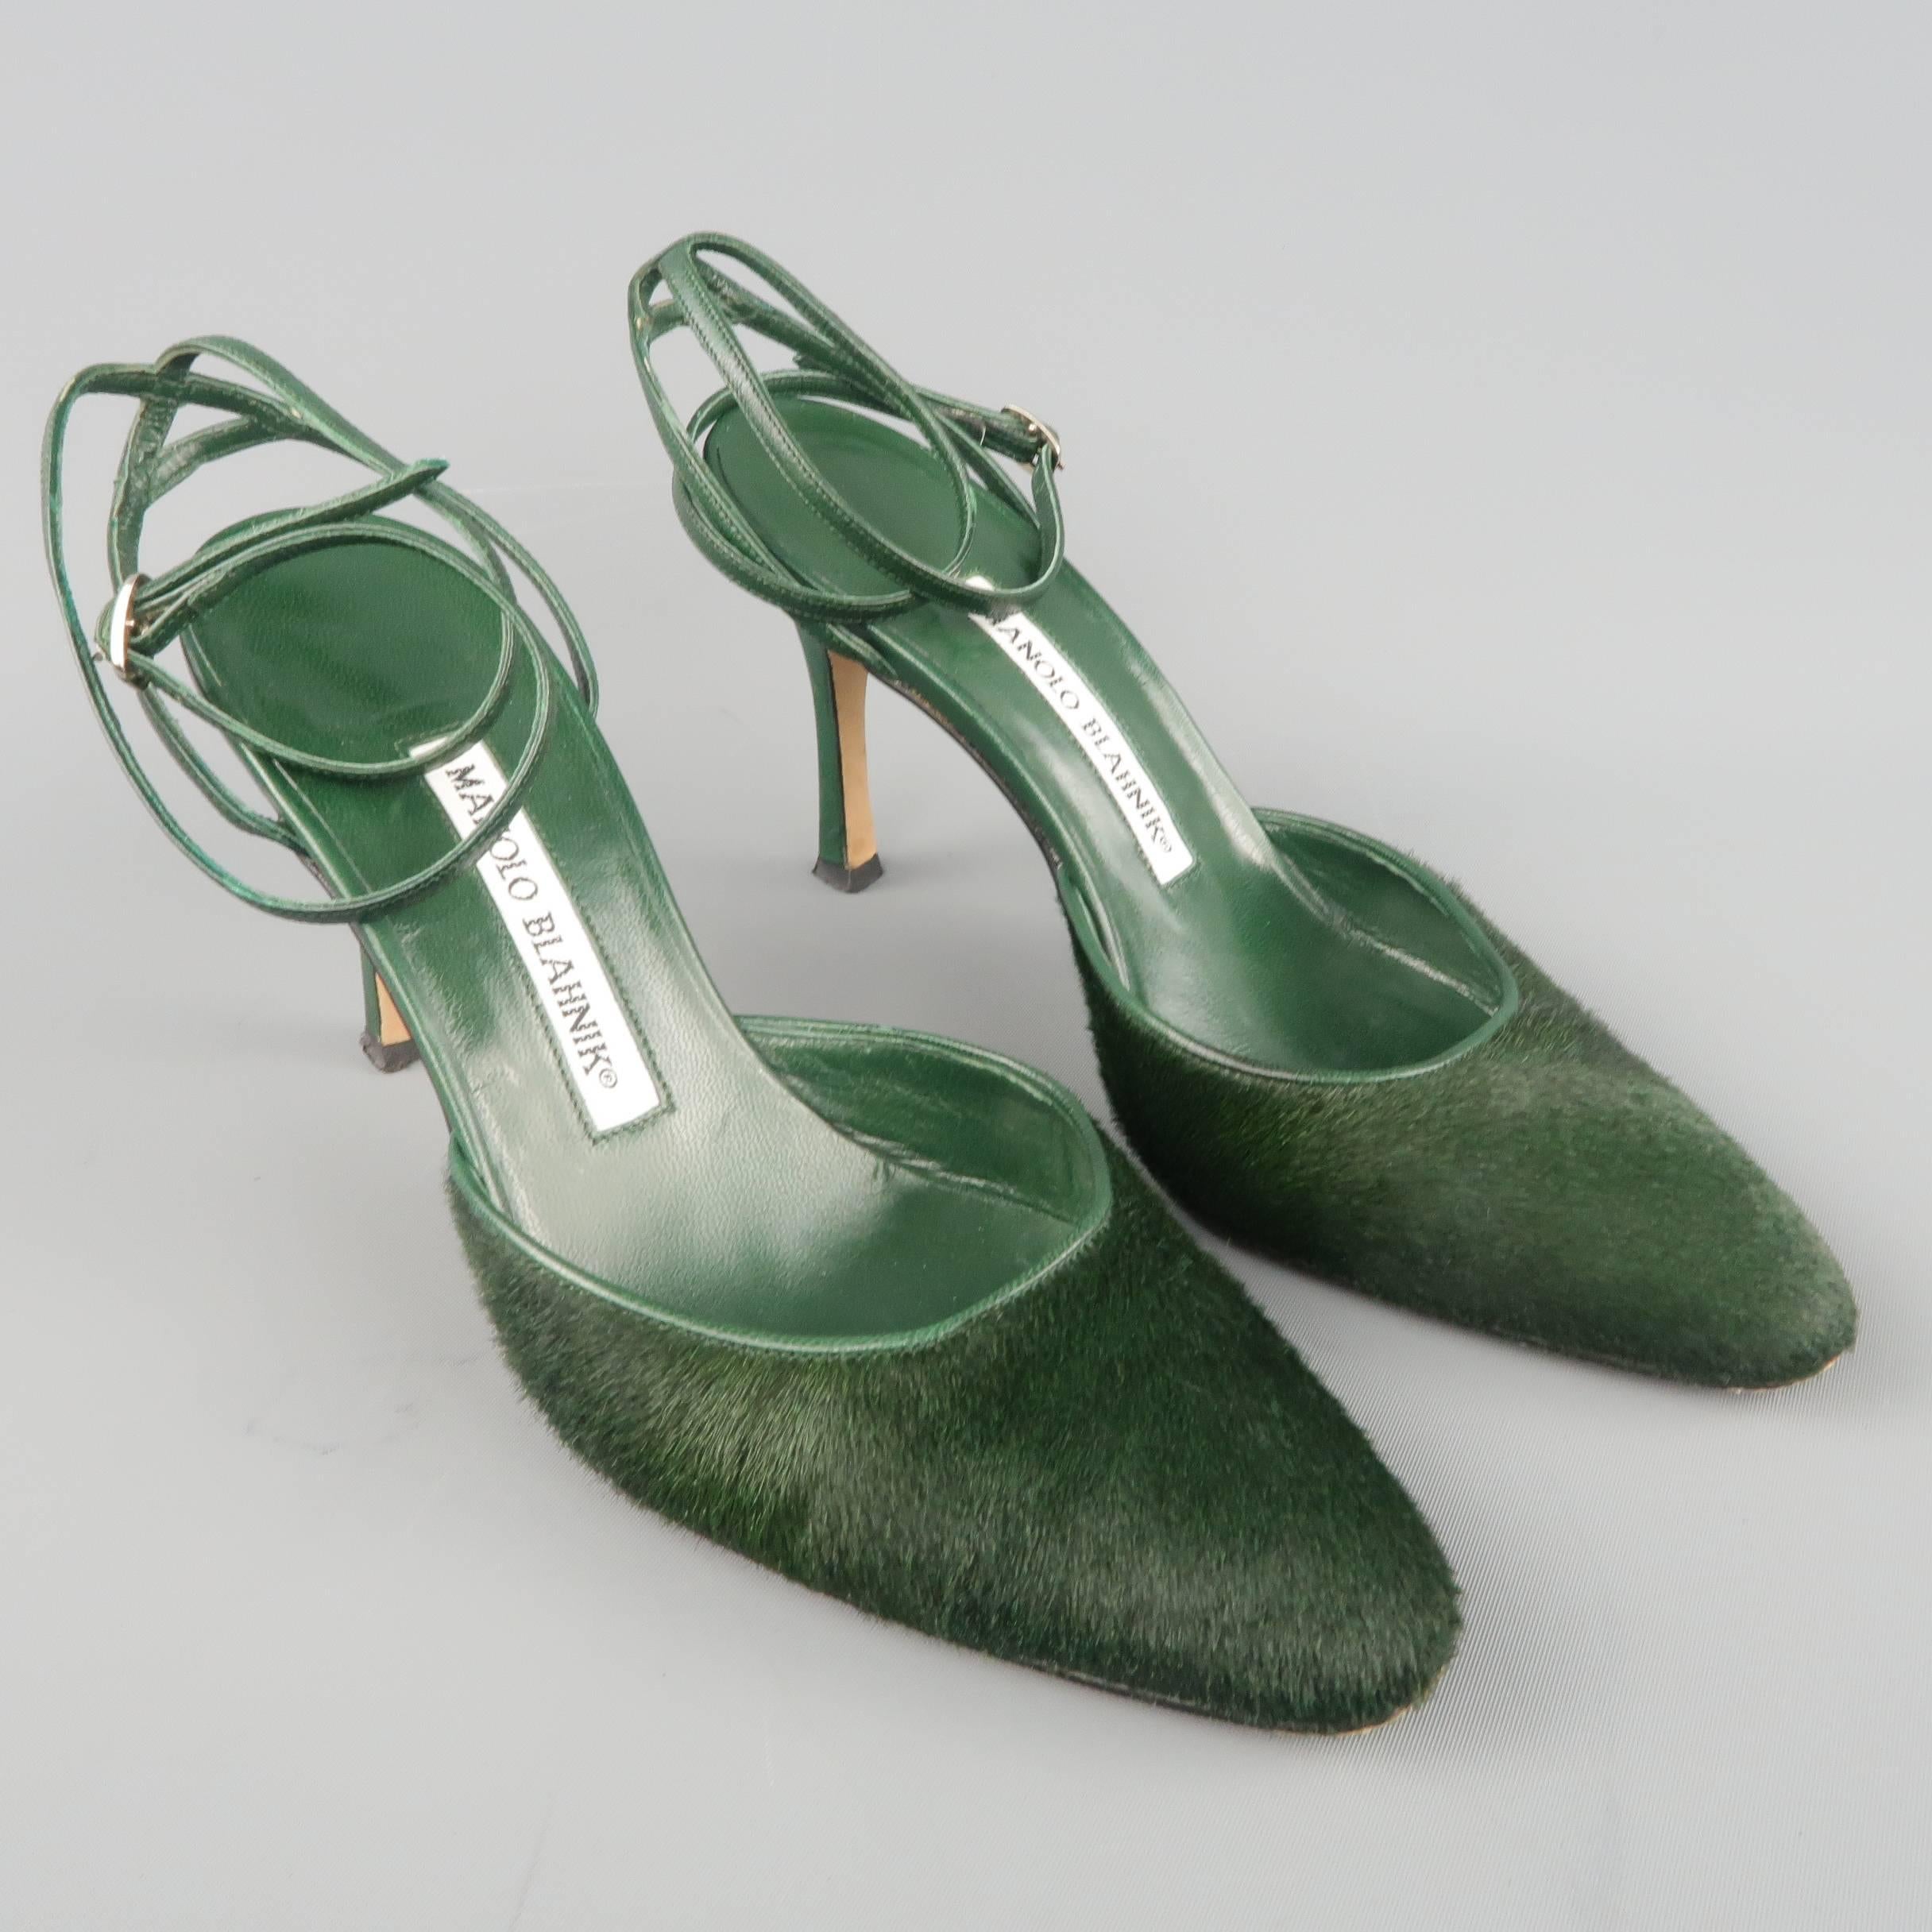 MANOLO BLAHNIK Pumps Heels Size 5.5  - Green Ponyhair & Leather Ankle Strap 1